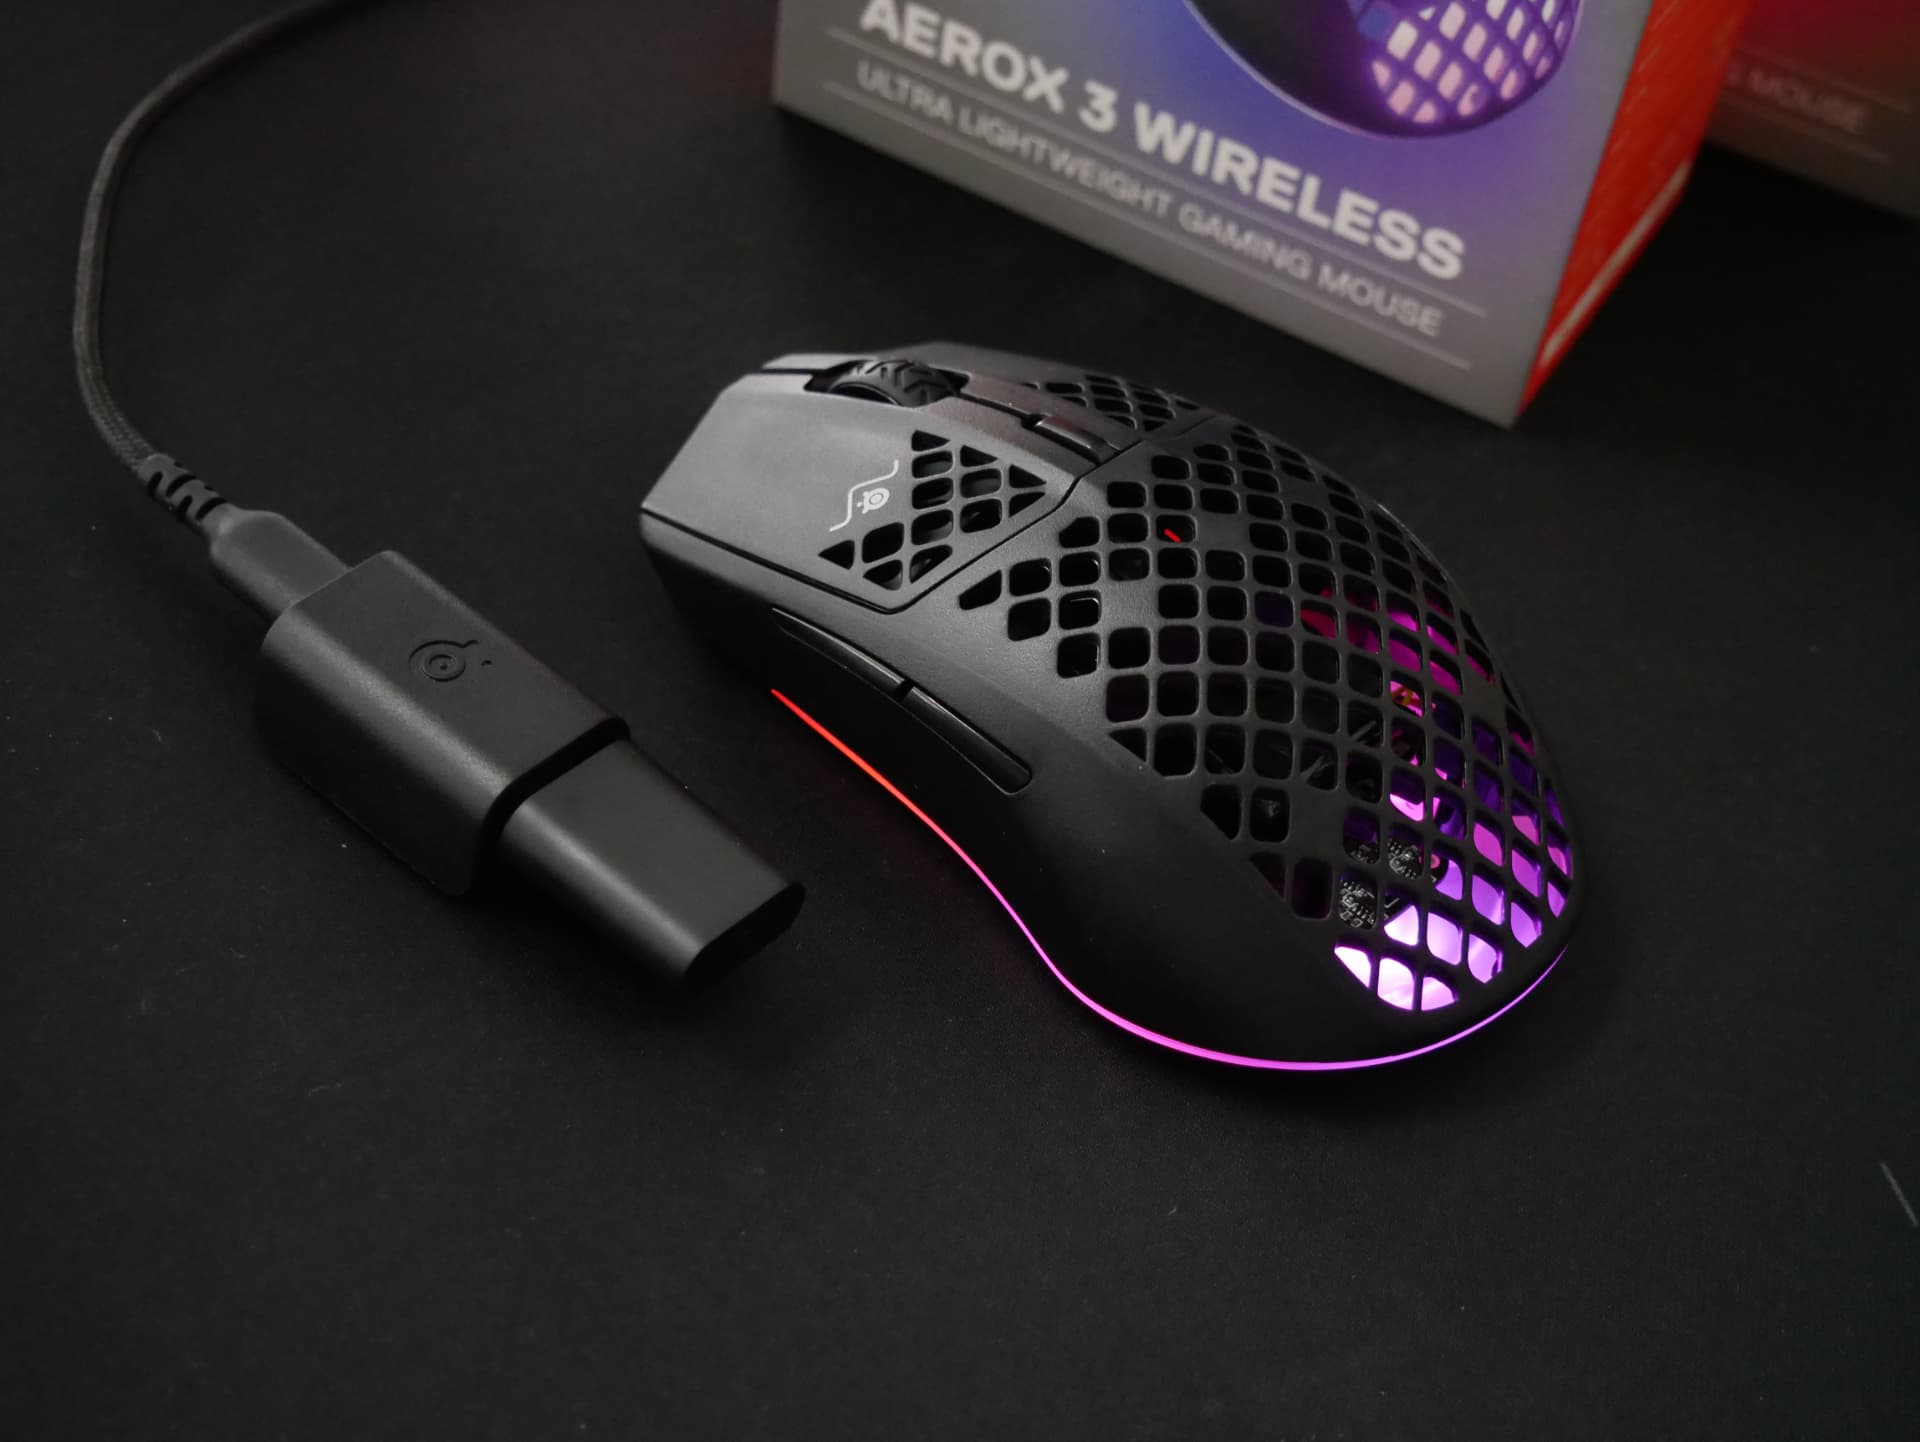 「SteelSeries Aerox 3 Wireless」レビュー。完成度が高い66gの軽量ワイヤレスマウス